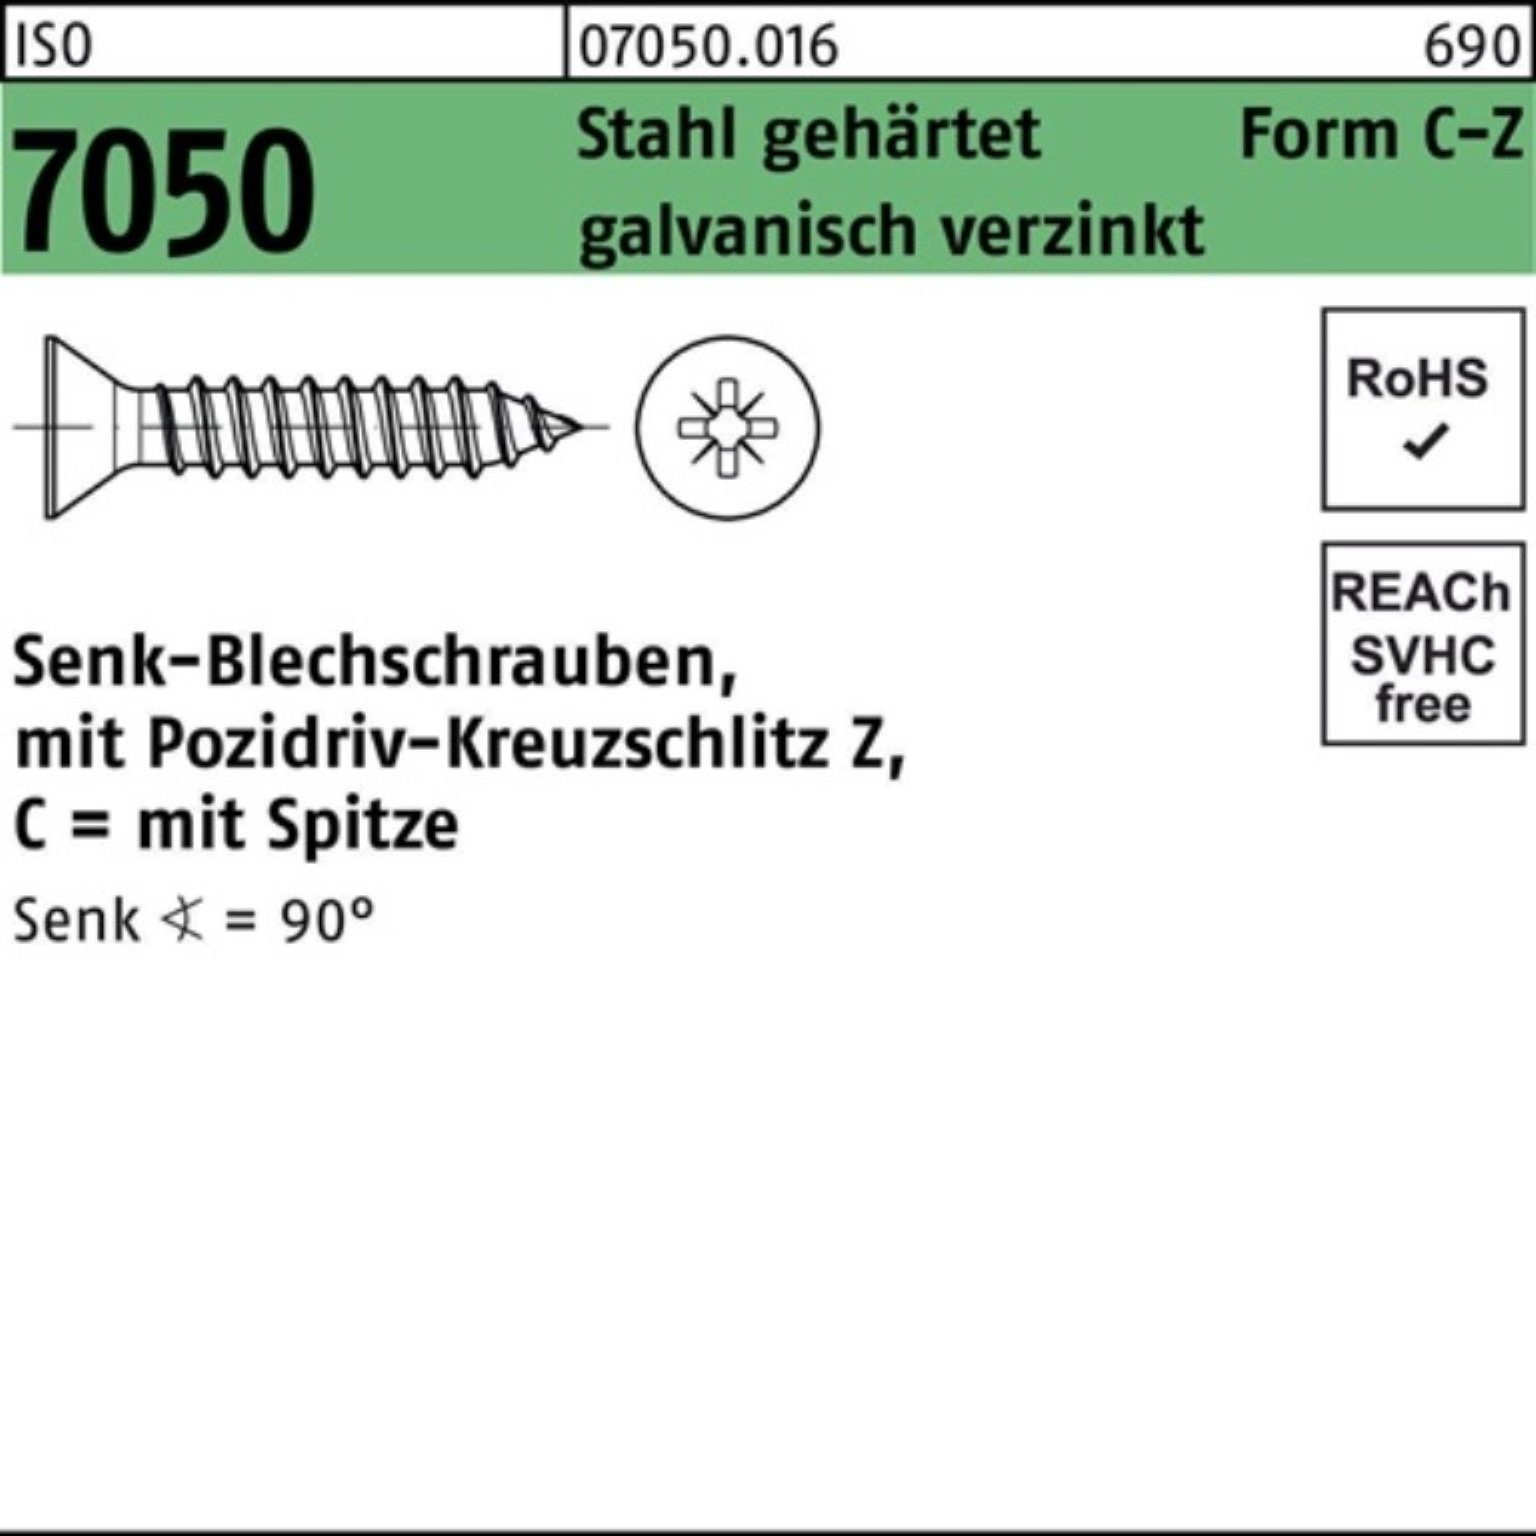 ISO Spitze/PZ Reyher Blechschraube Blechschraube Pack g 4,2x -C-Z 1000er SEKO 13 7050 Stahl